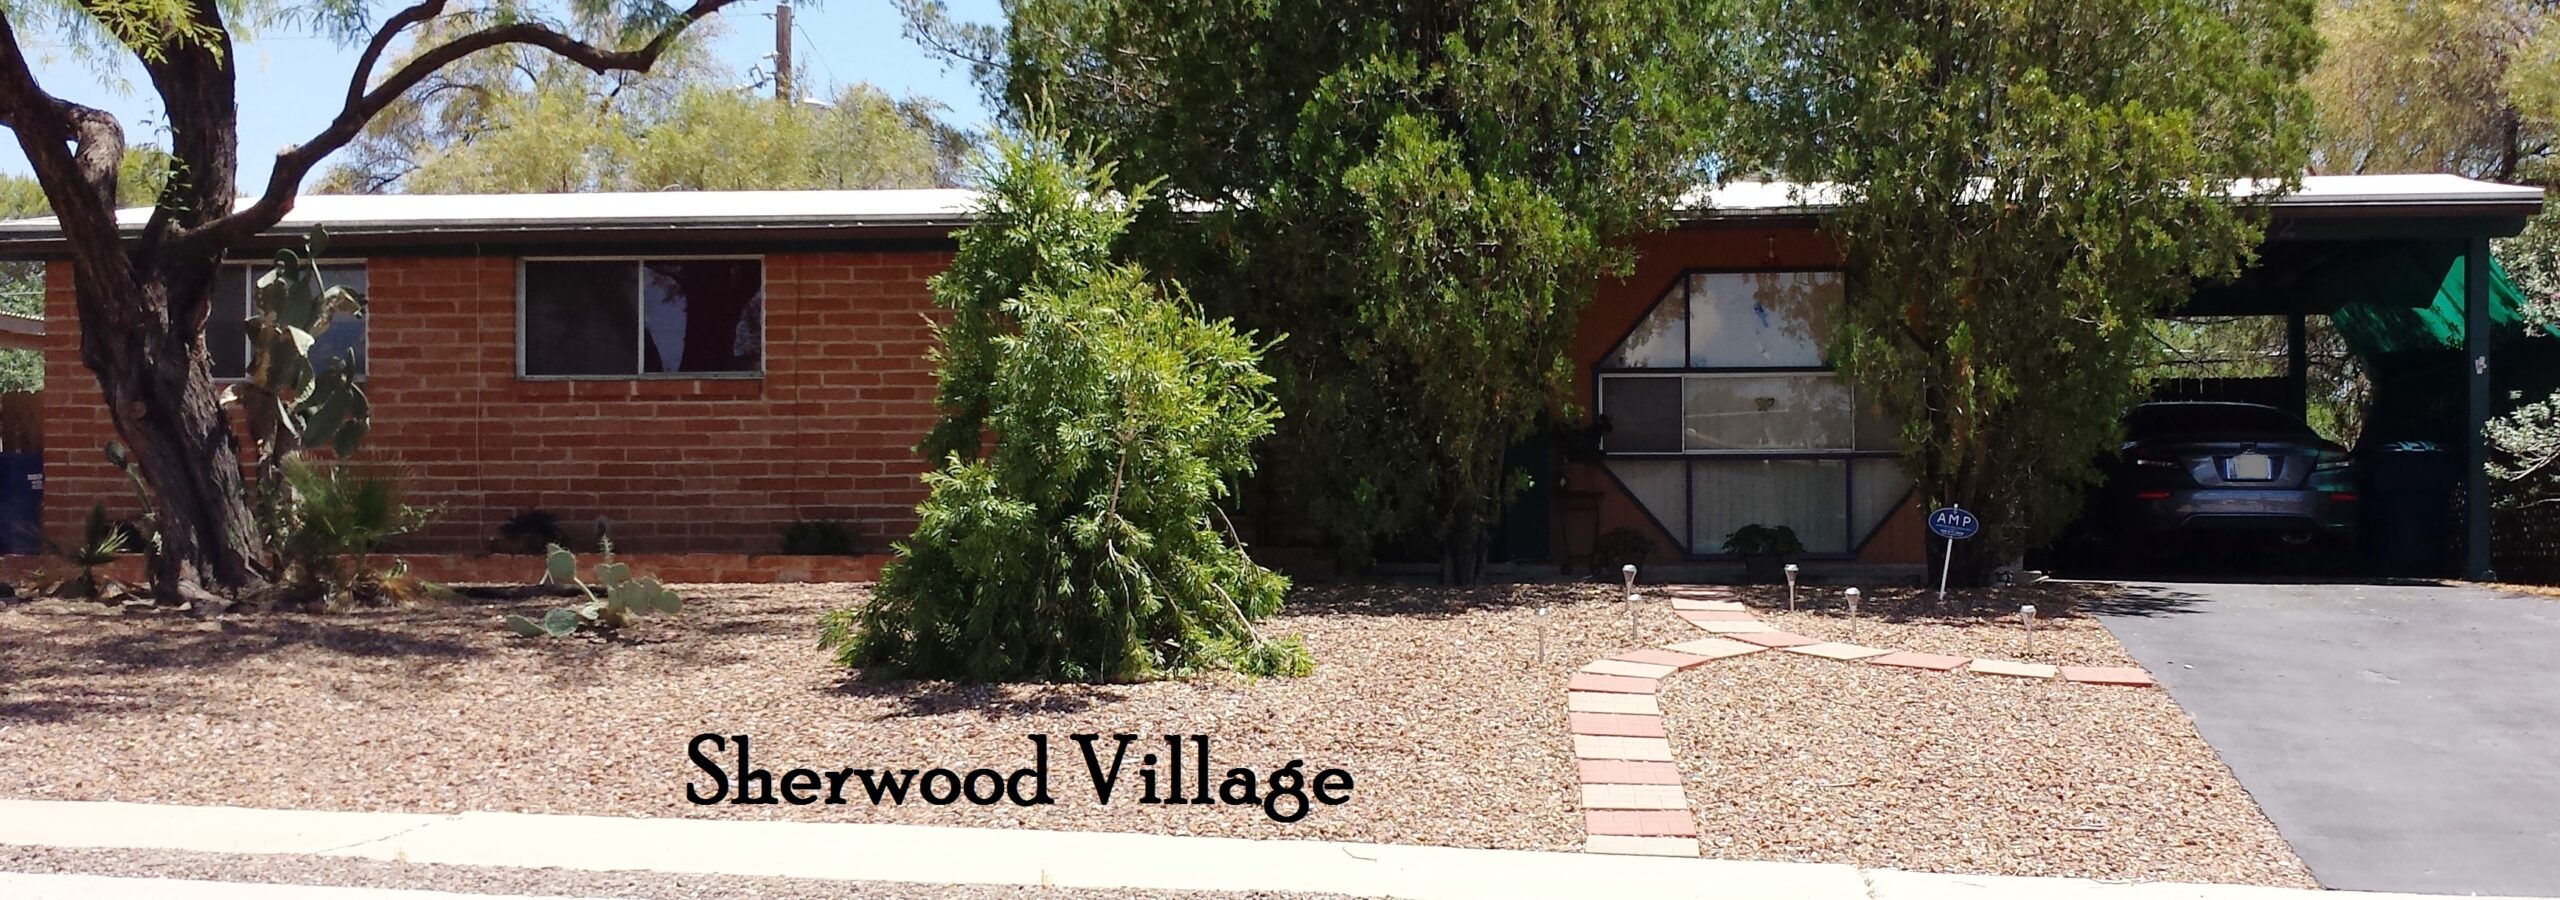 Sherwood Village a Lusk neighborhood on the east side of Tucson